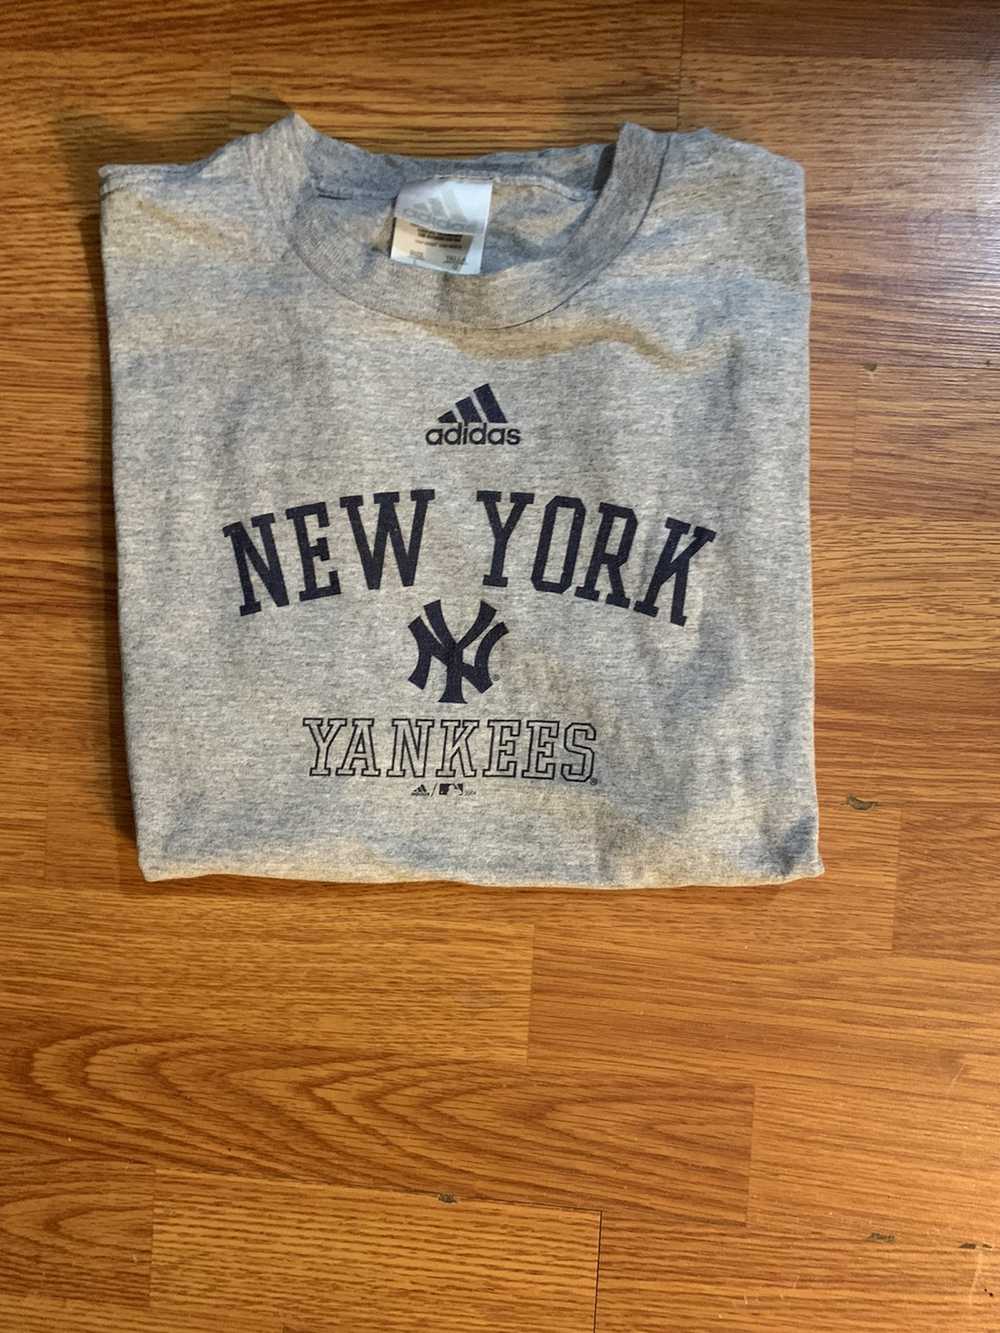 New York Yankees × Vintage × Yankees Yankees Shirt - image 1